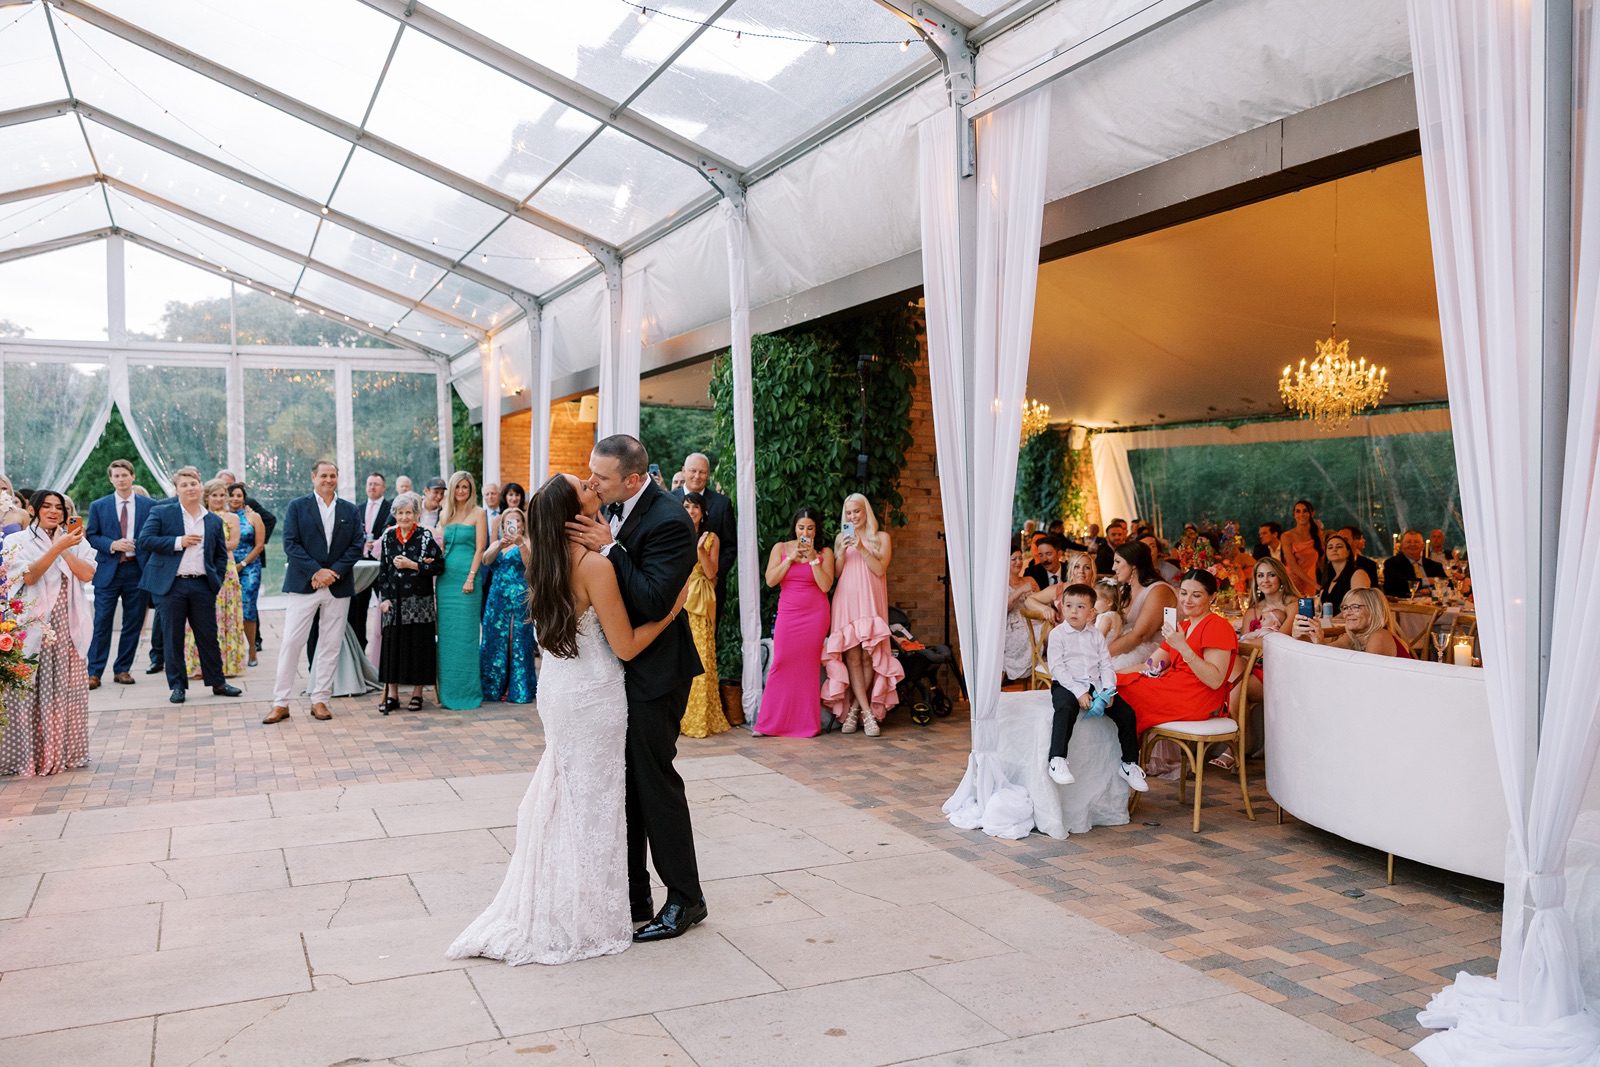 Bride and groom have first dance under tent at Chicago Botanic Garden wedding